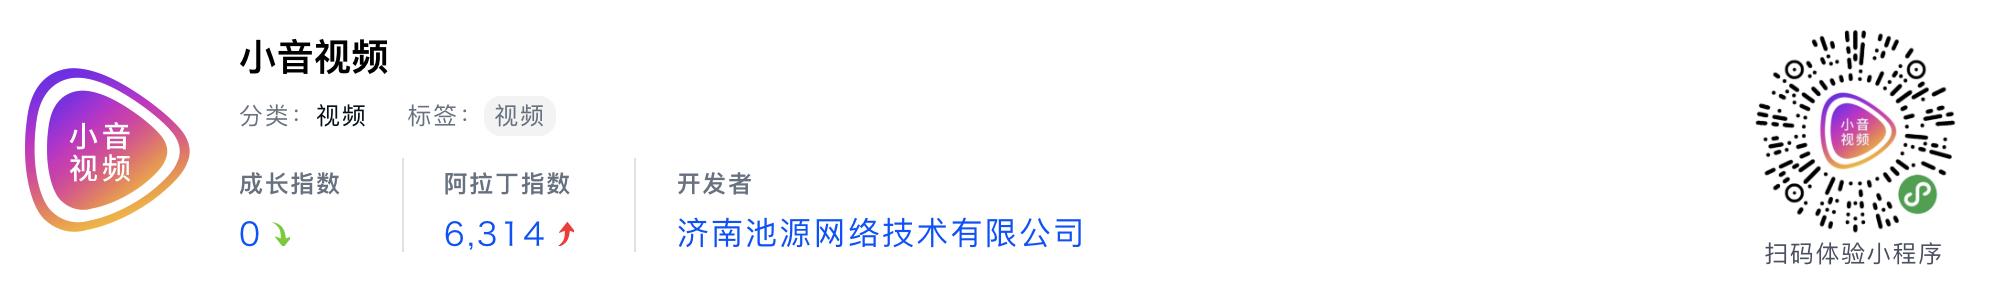 WeChatミニプログラム最新ランキングTOP20【2019年6月版】19位 ：小音视频